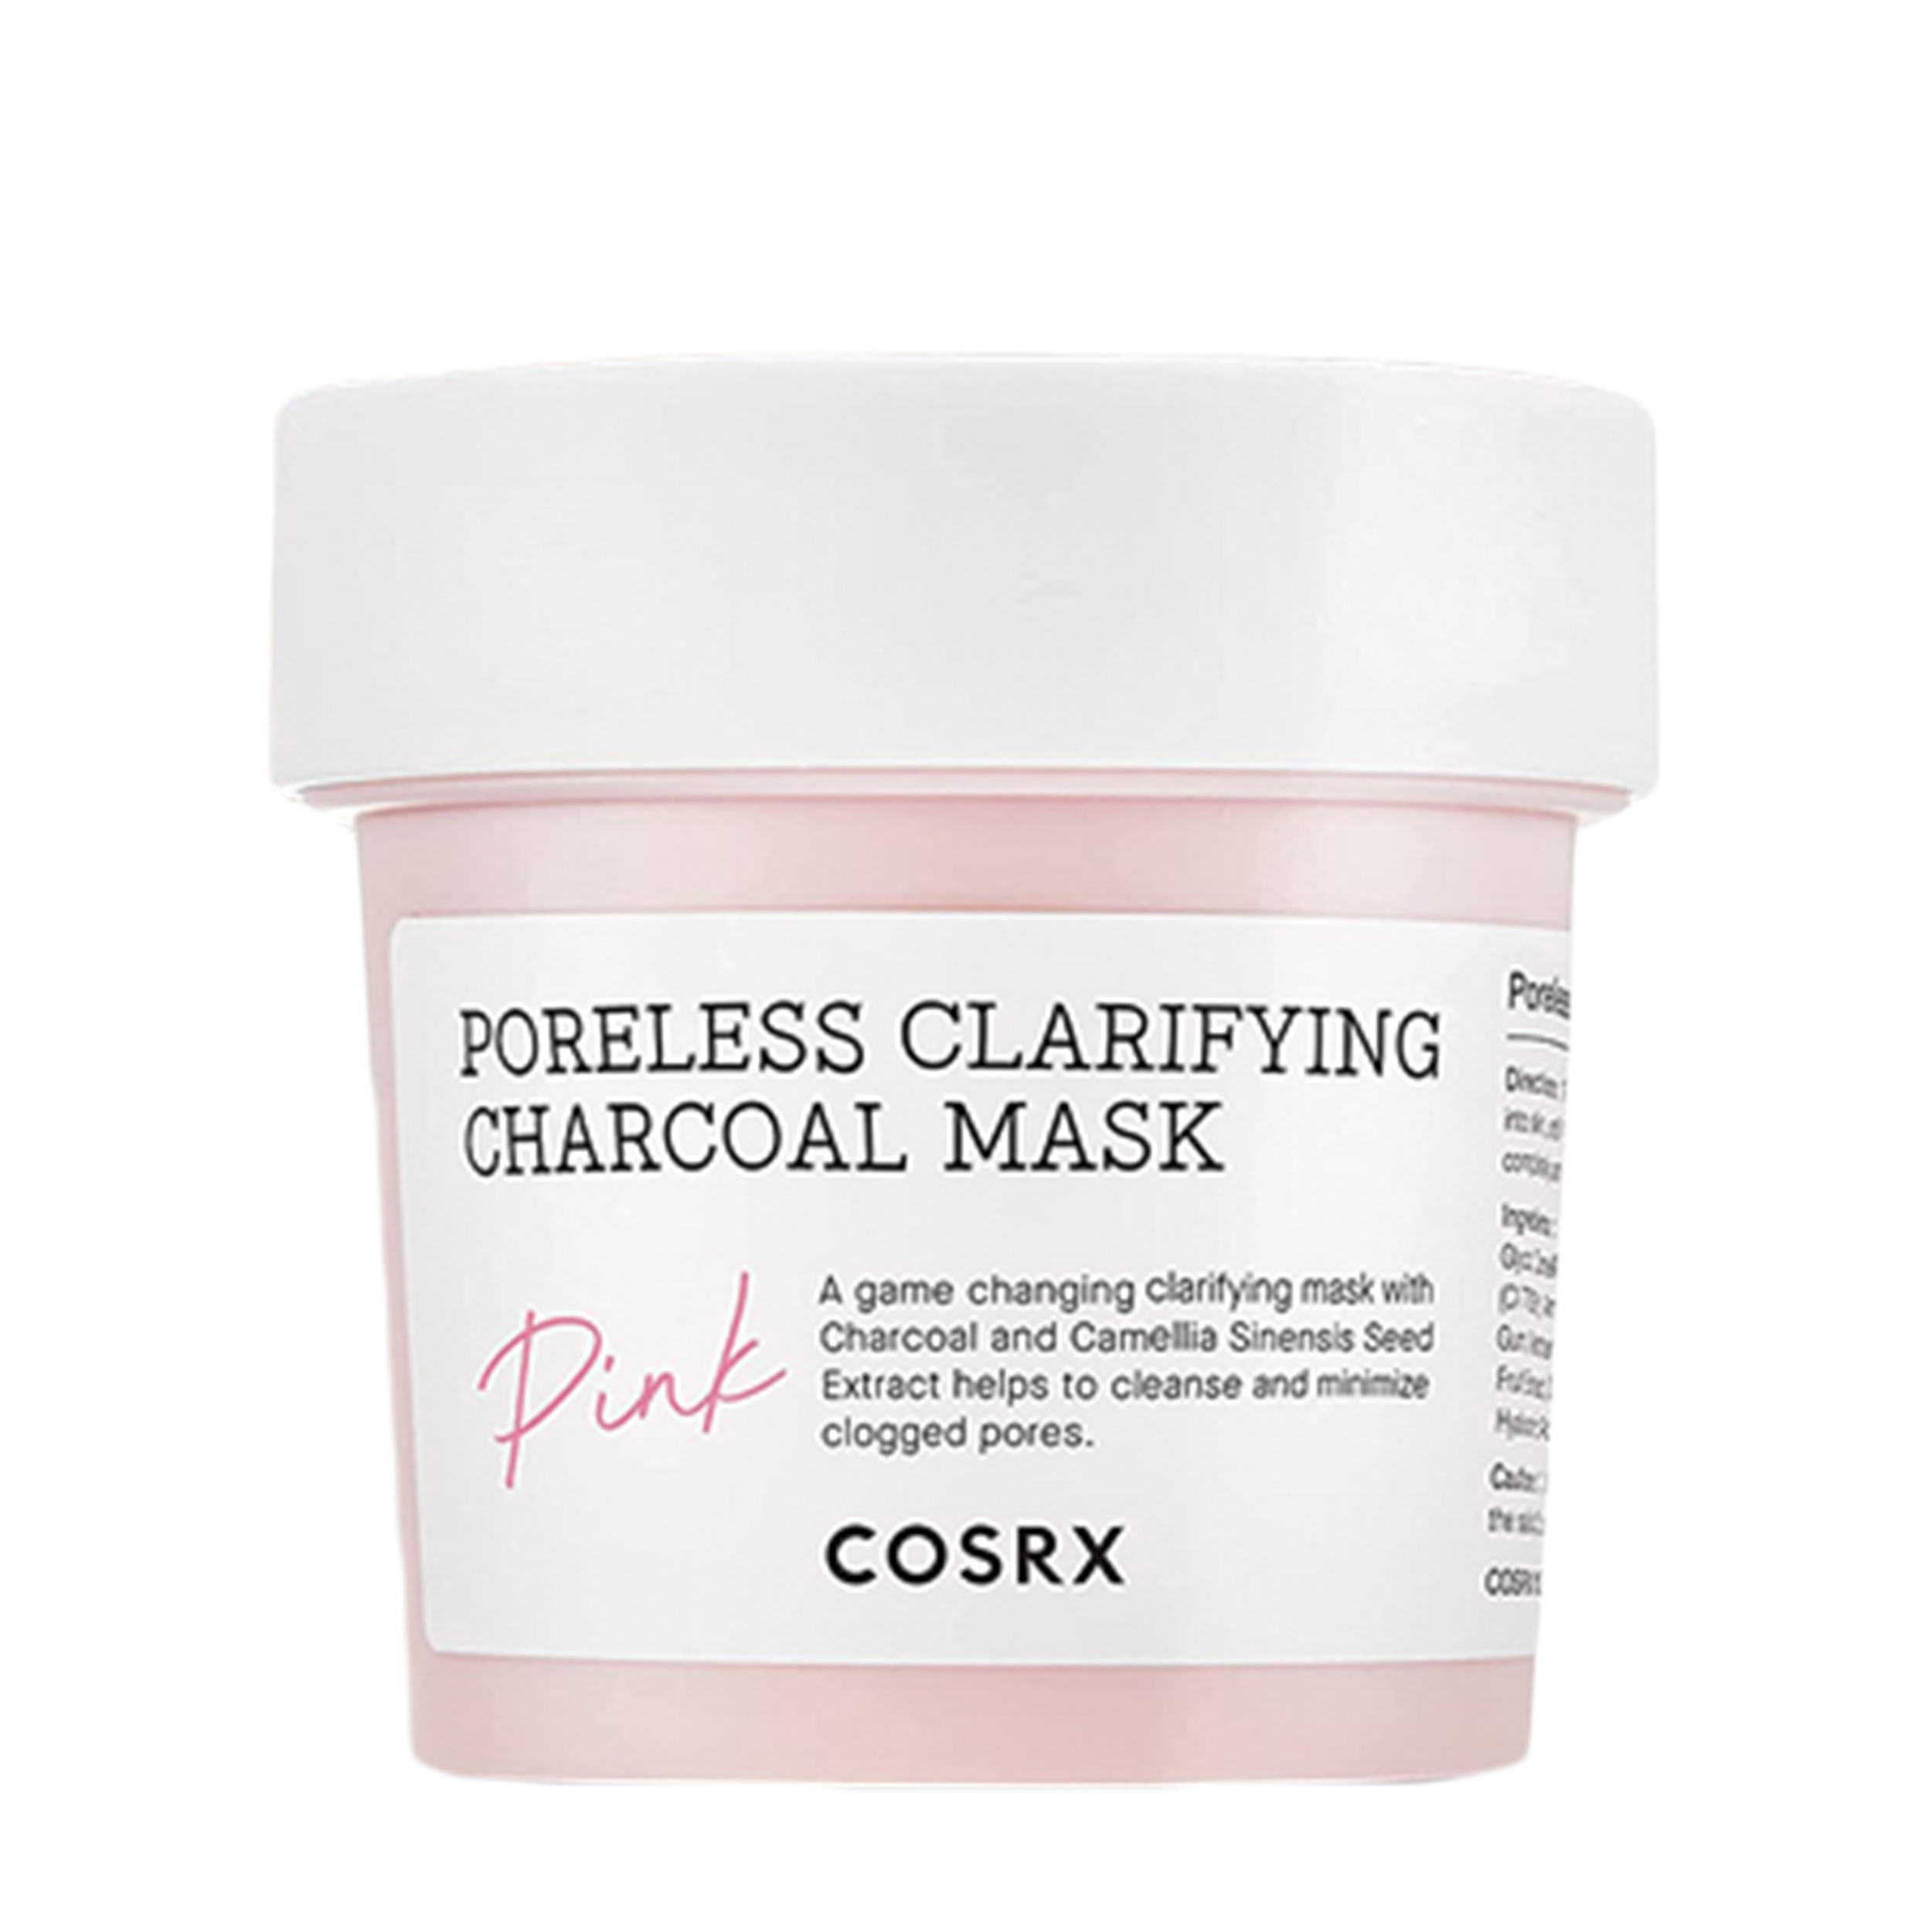 COSRX COSRX Маска для очищения пор для лица с углем Pink 110 гр от Foambox